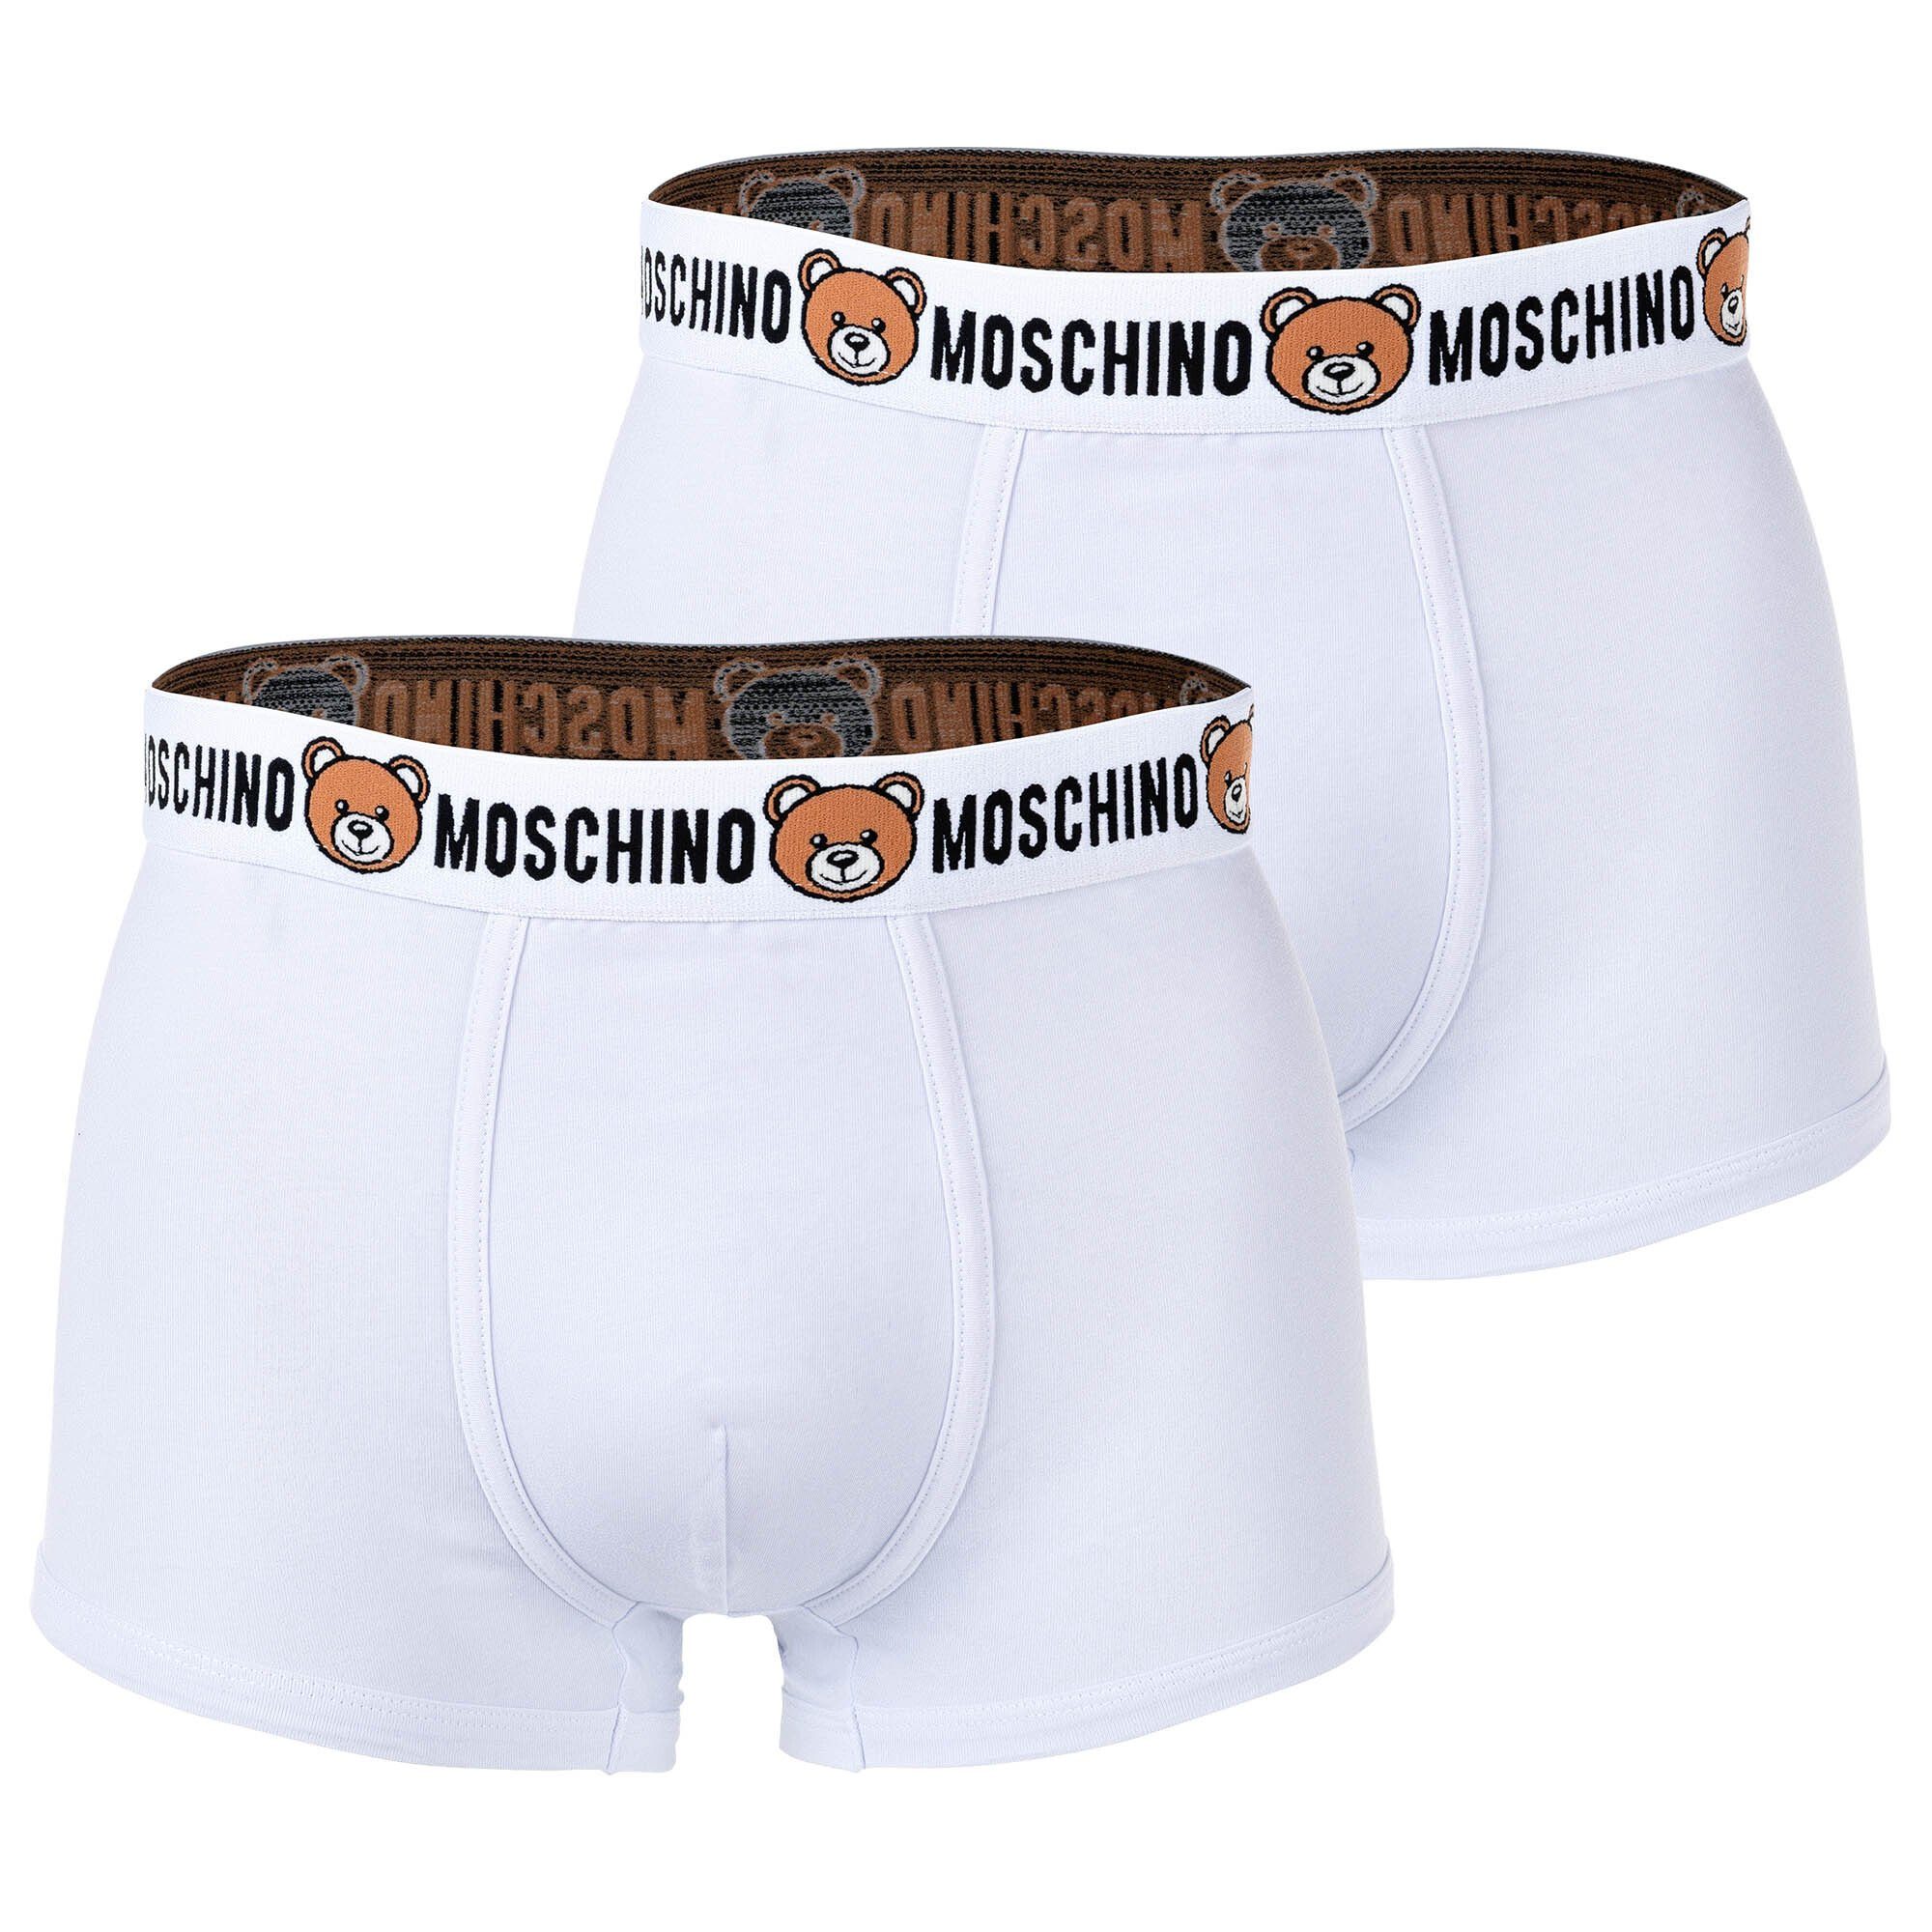 Moschino Boxer Herren Boxershorts 2er Pack - Underbear Weiß